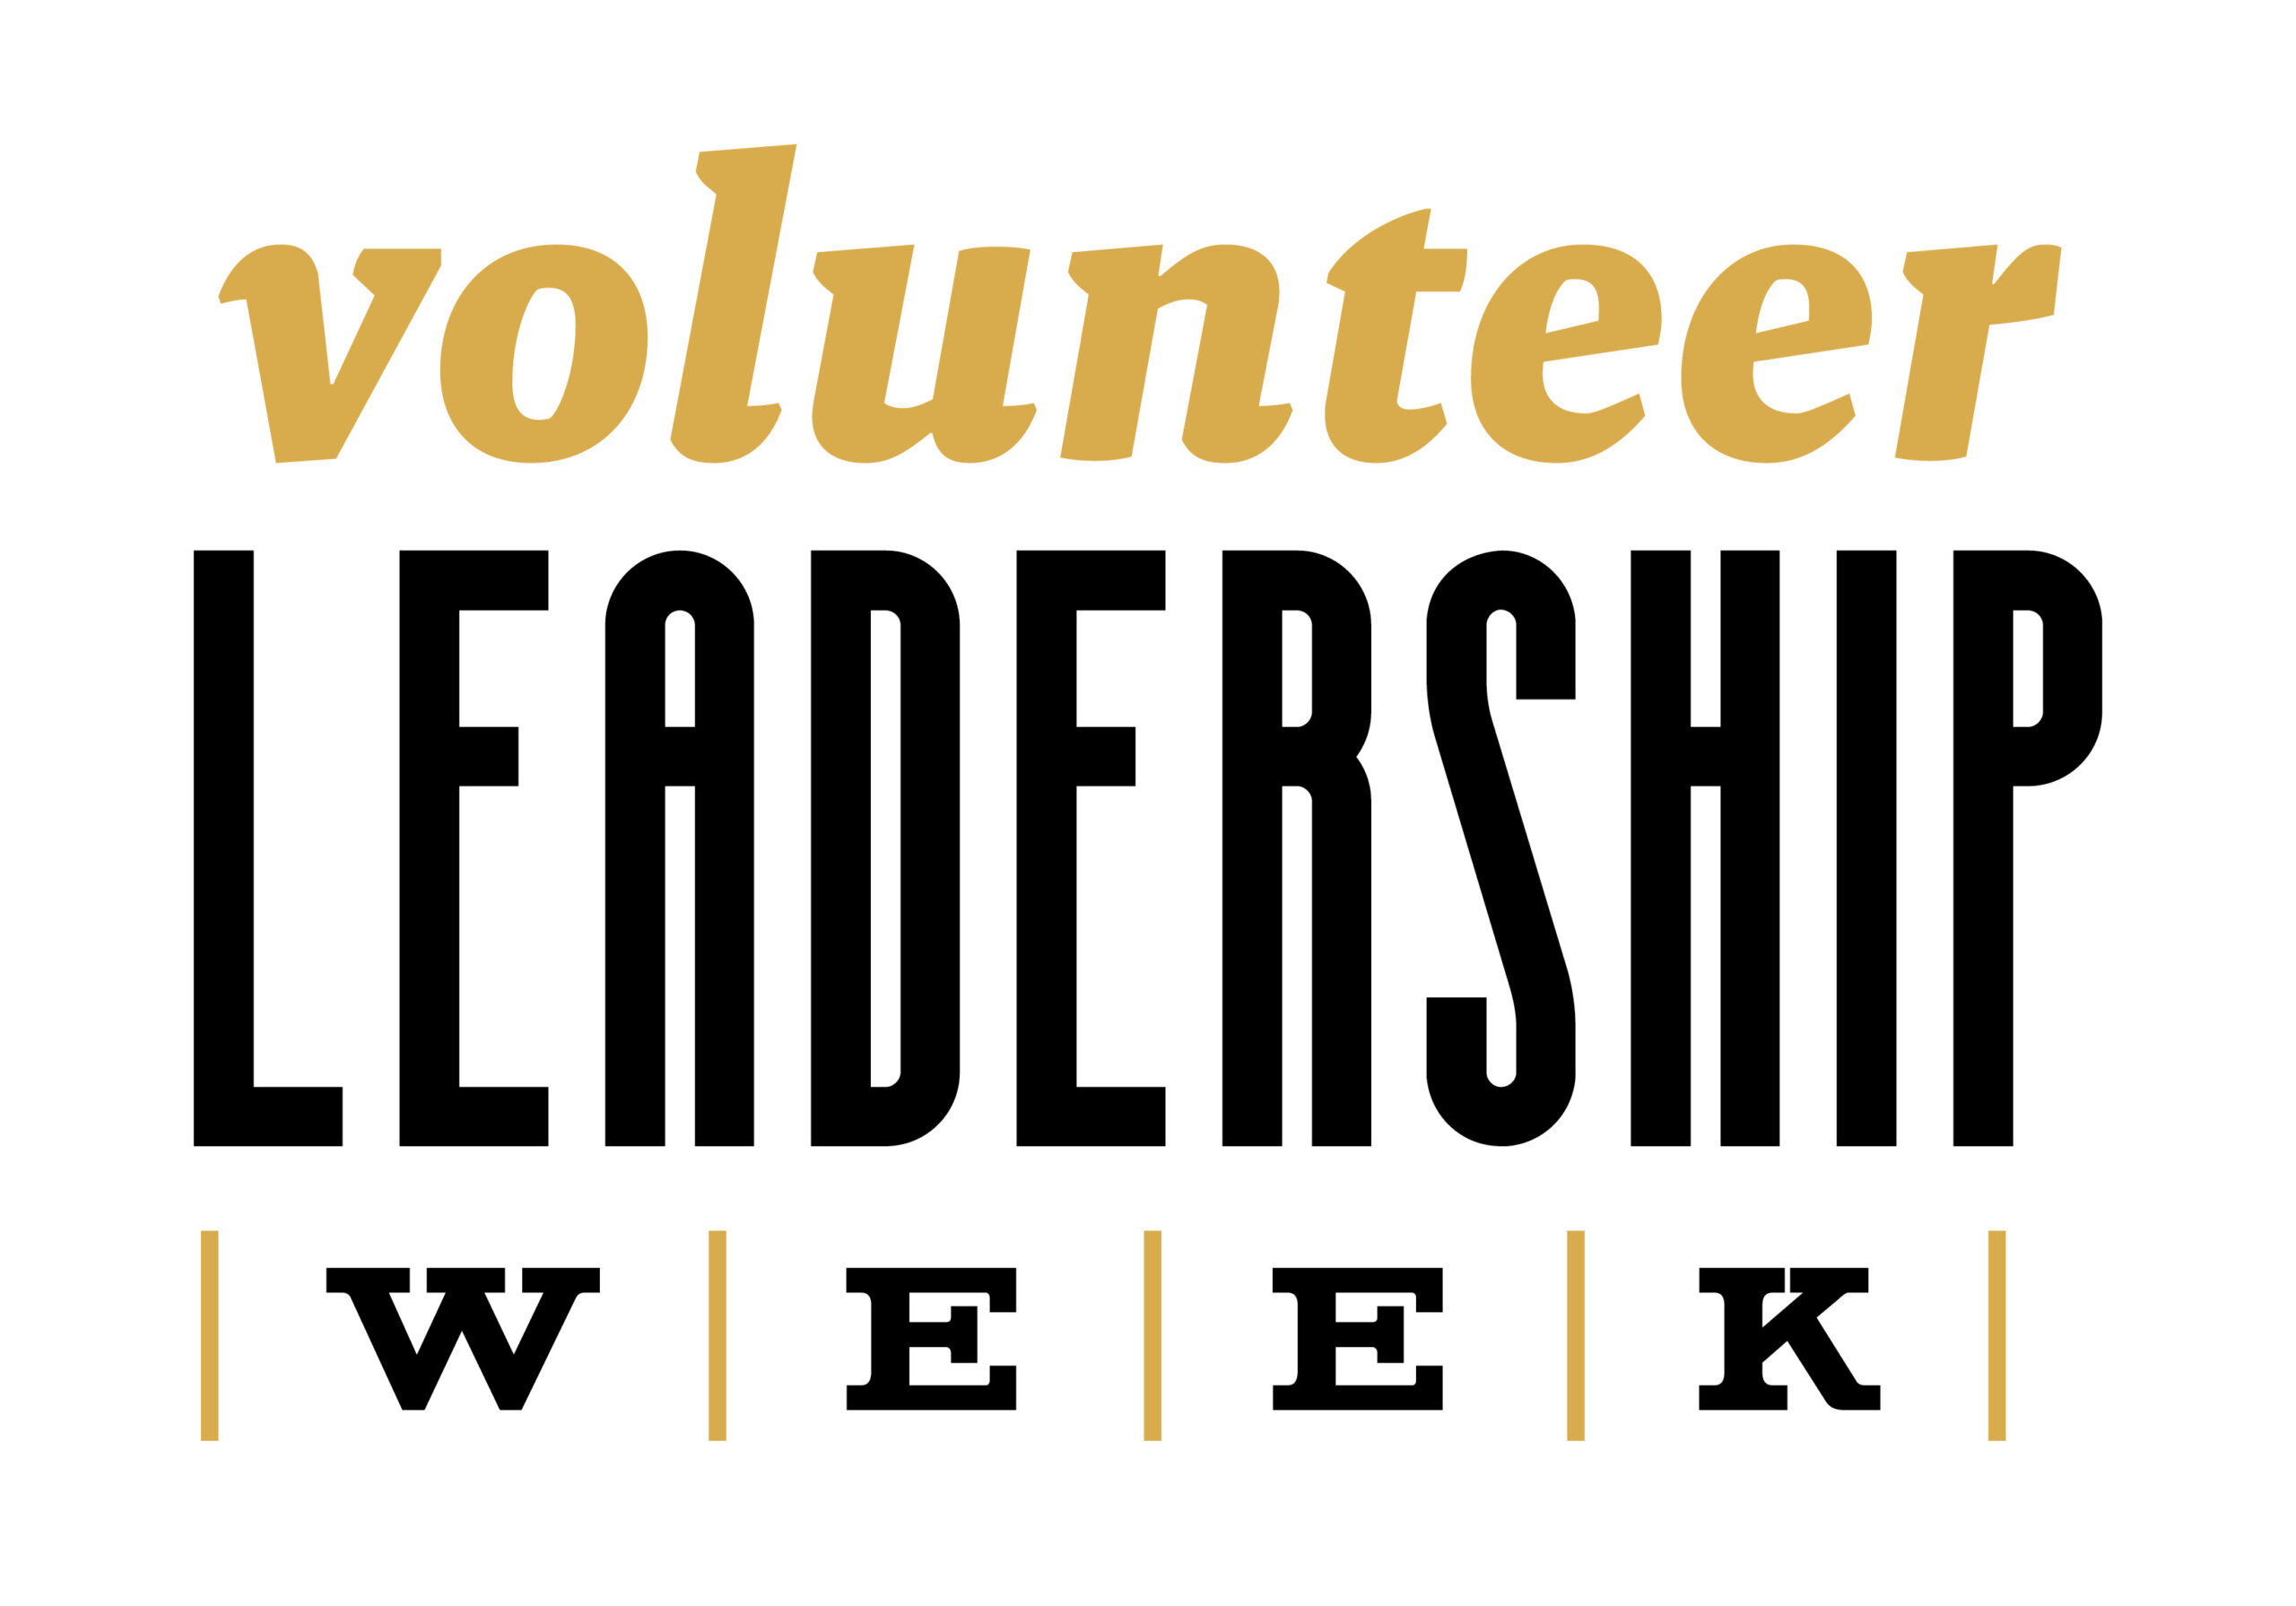 Vanderbilt’s Volunteer Leadership Week drives collaboration and support